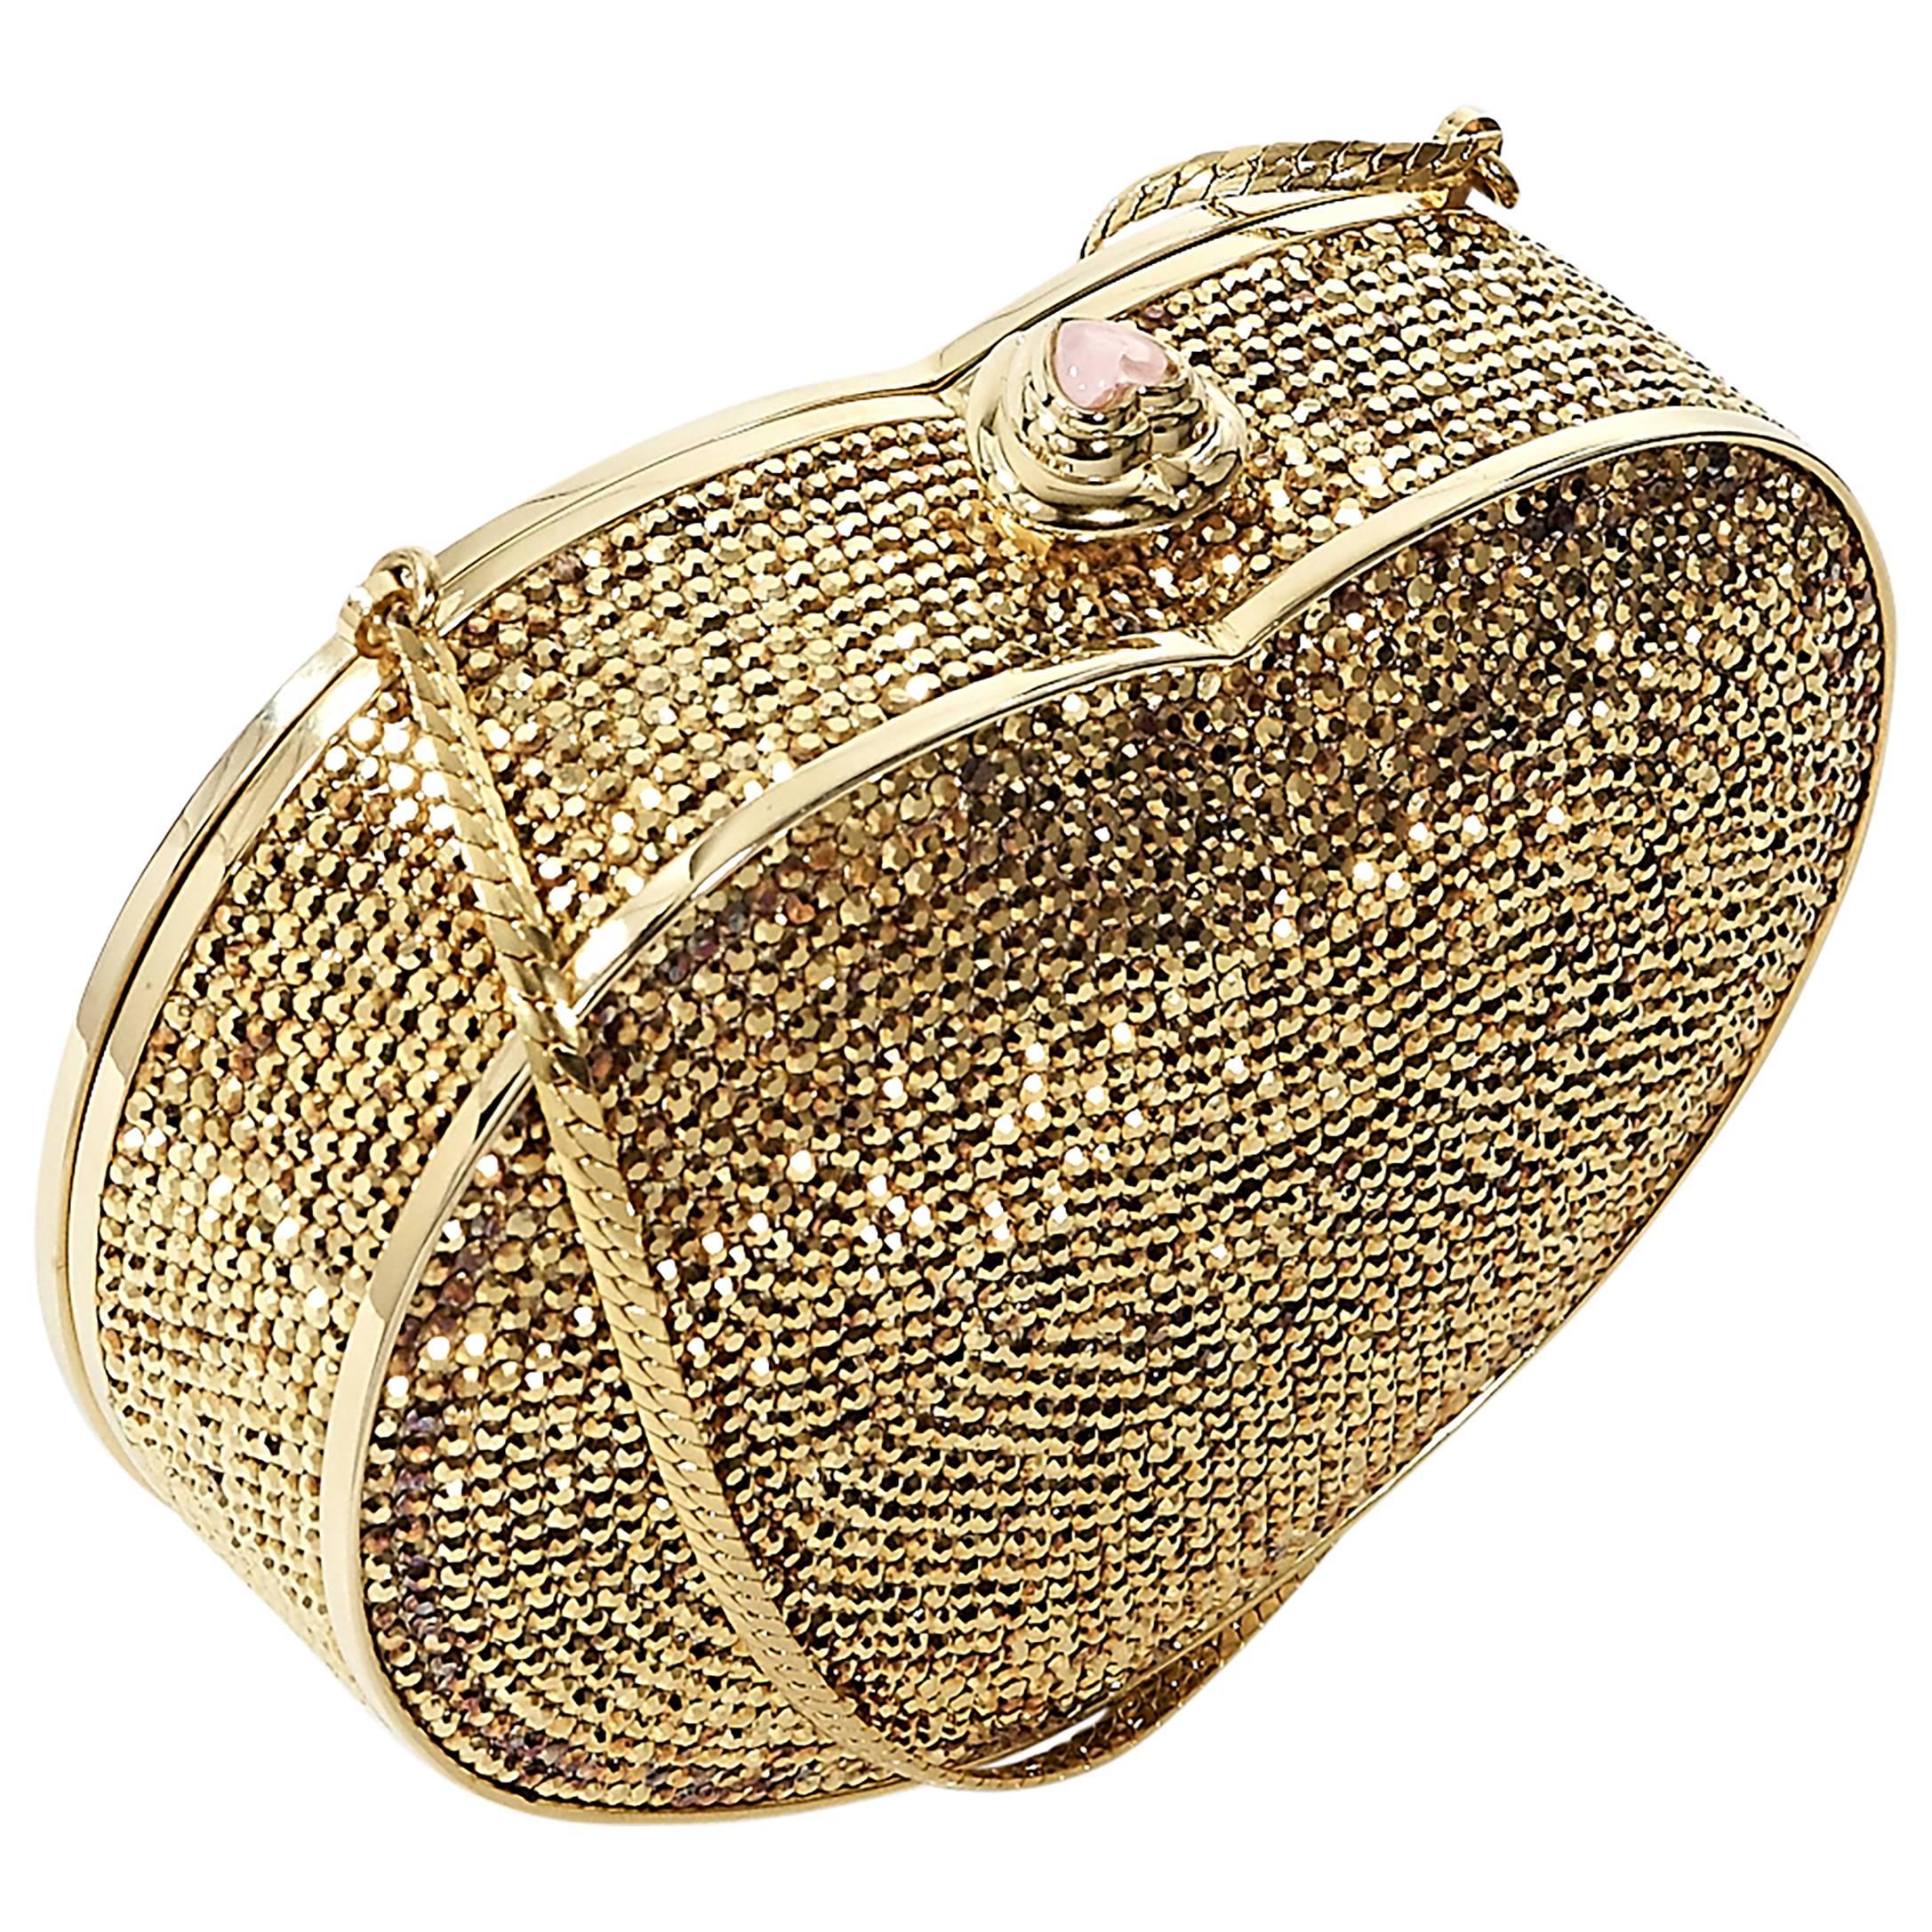 Gold Judith Leiber Embellished Heart Clutch